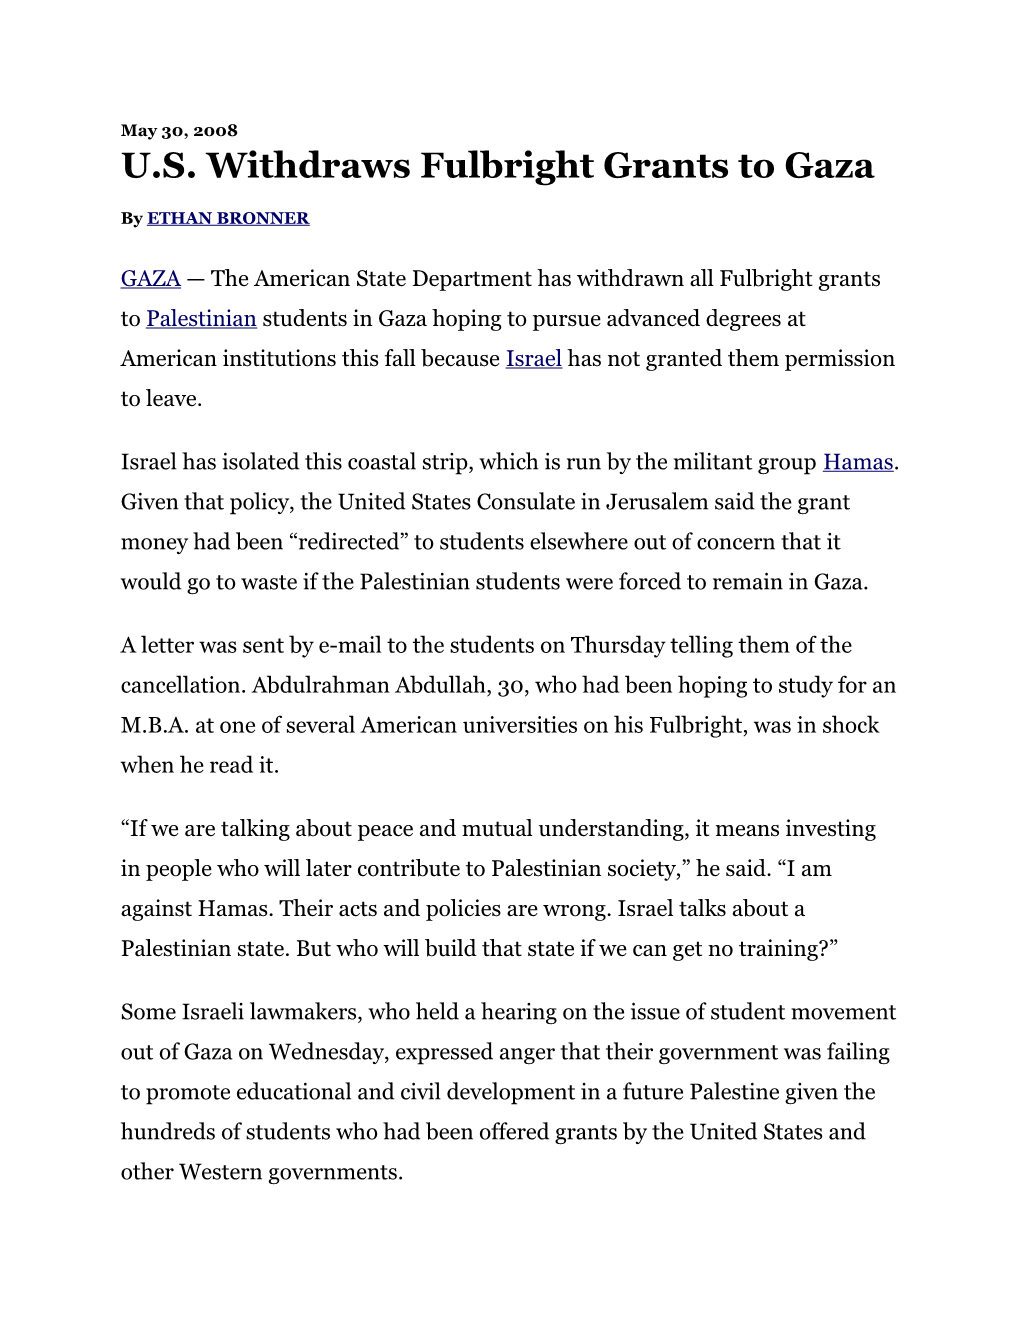 U.S. Withdraws Fulbright Grants to Gaza